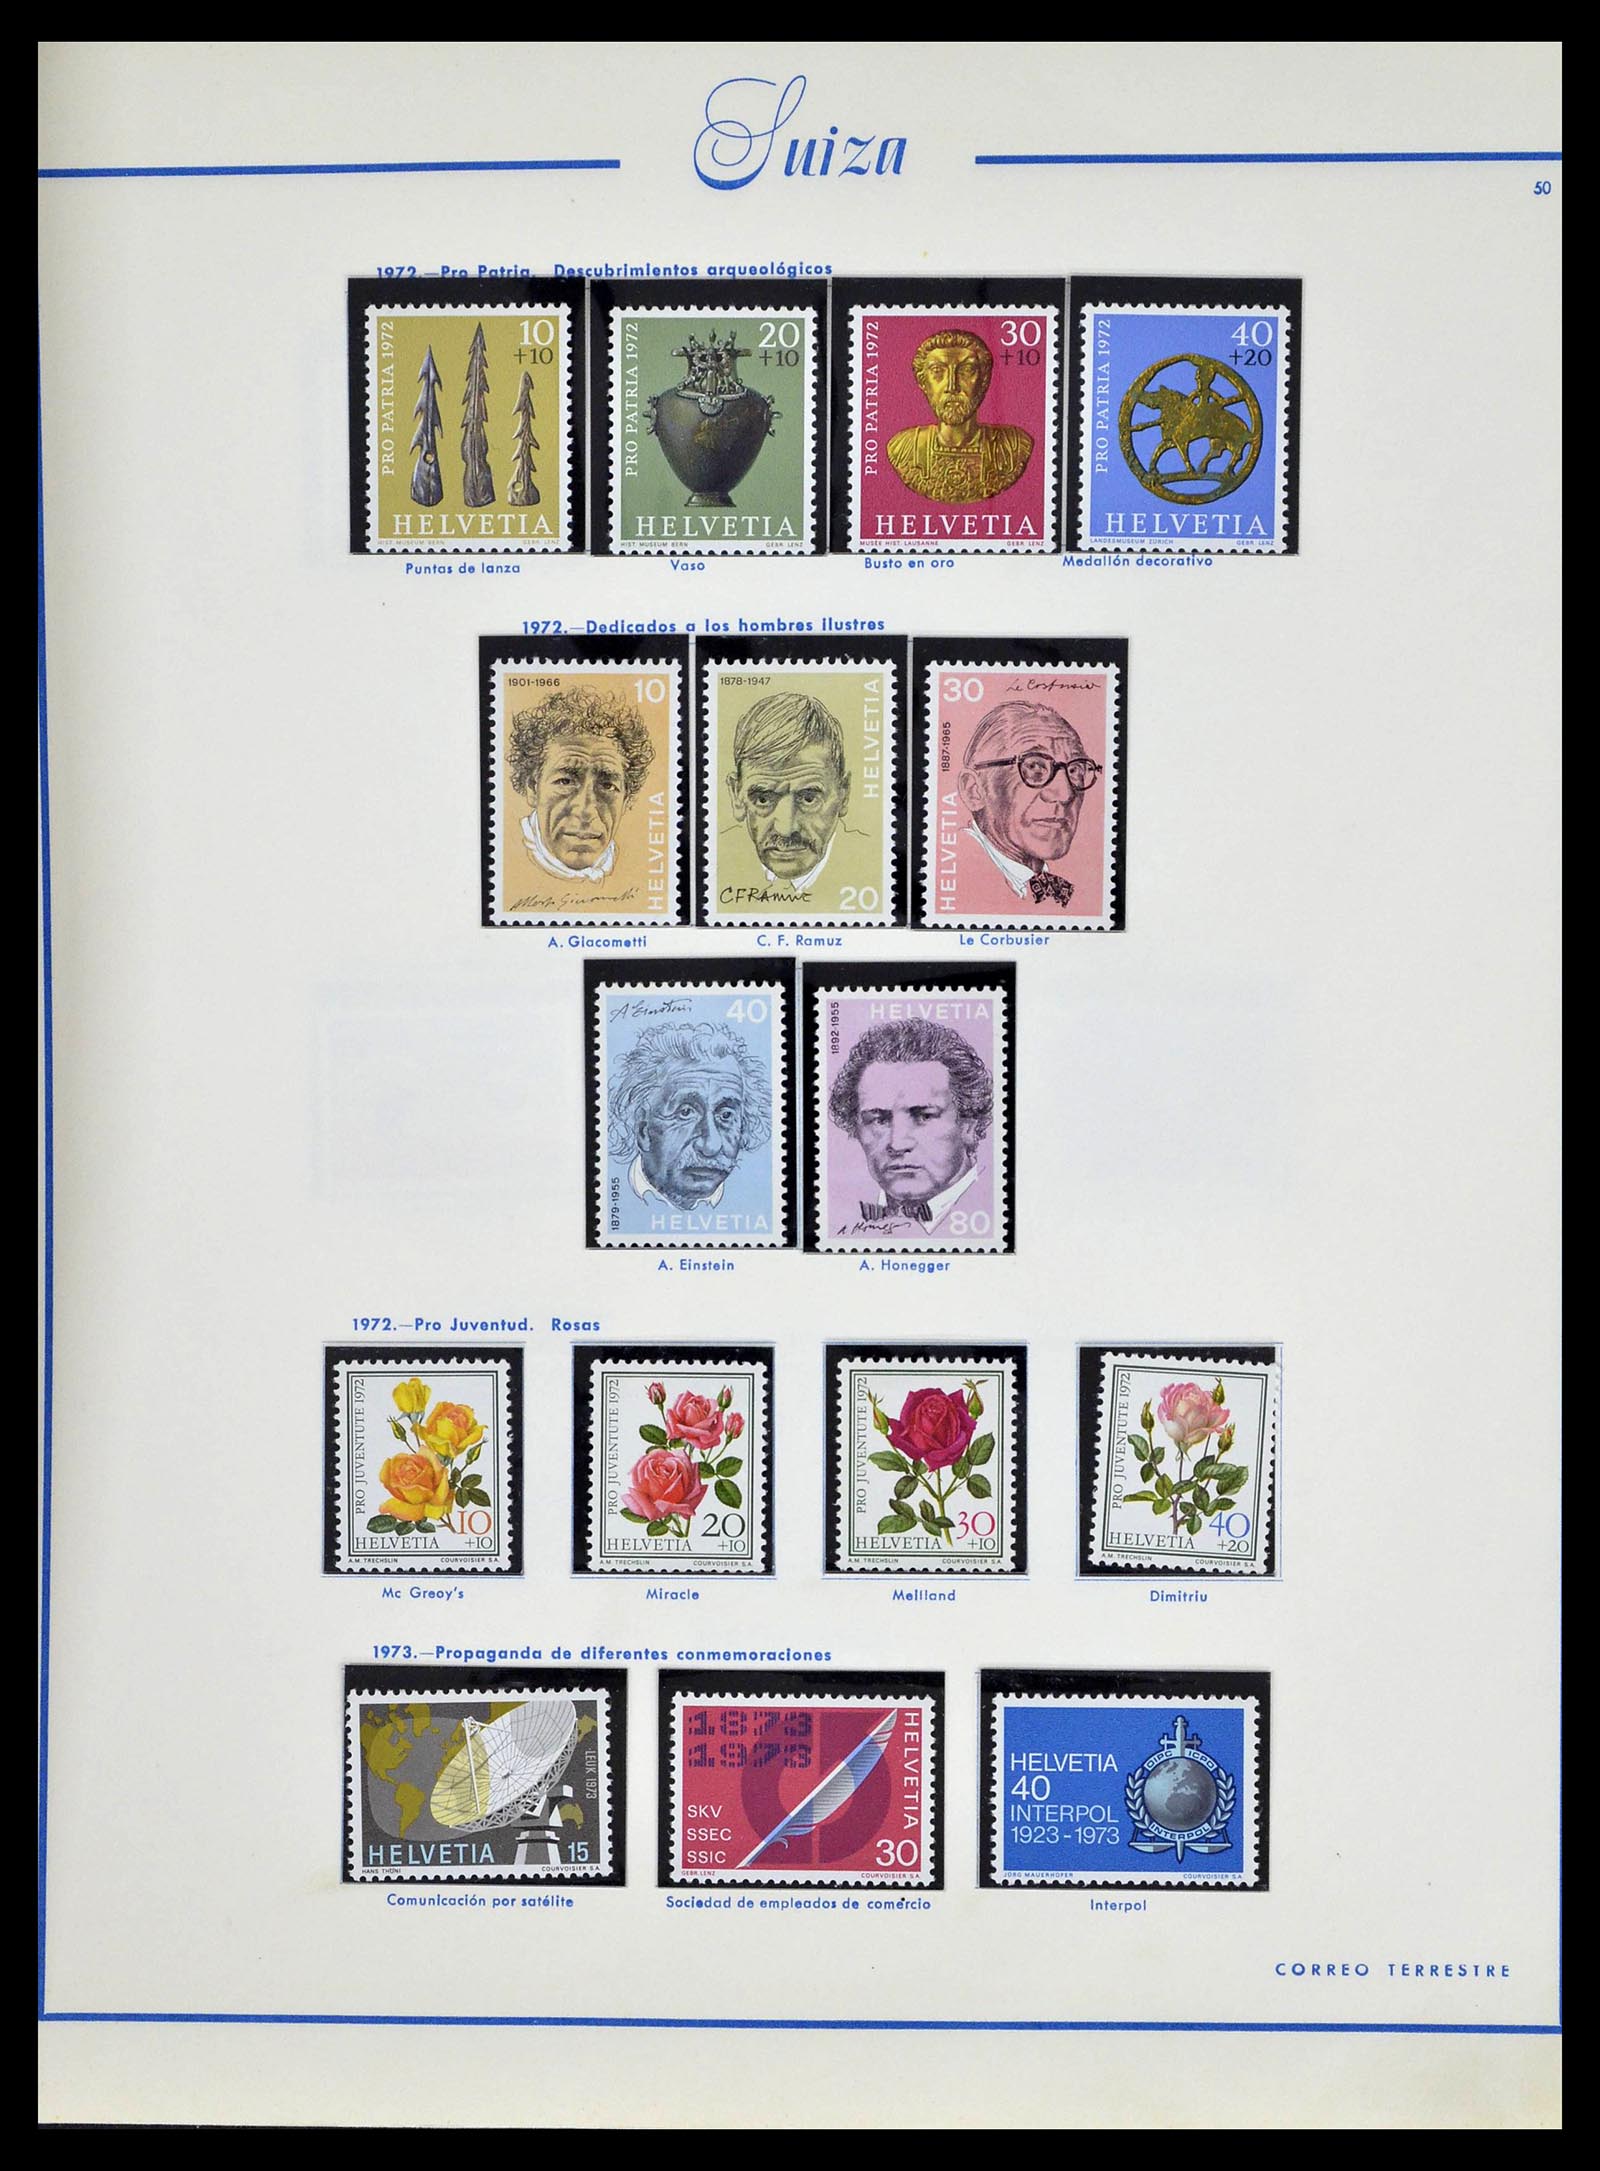 39217 0055 - Stamp collection 39217 Switzerland 1850-1986.